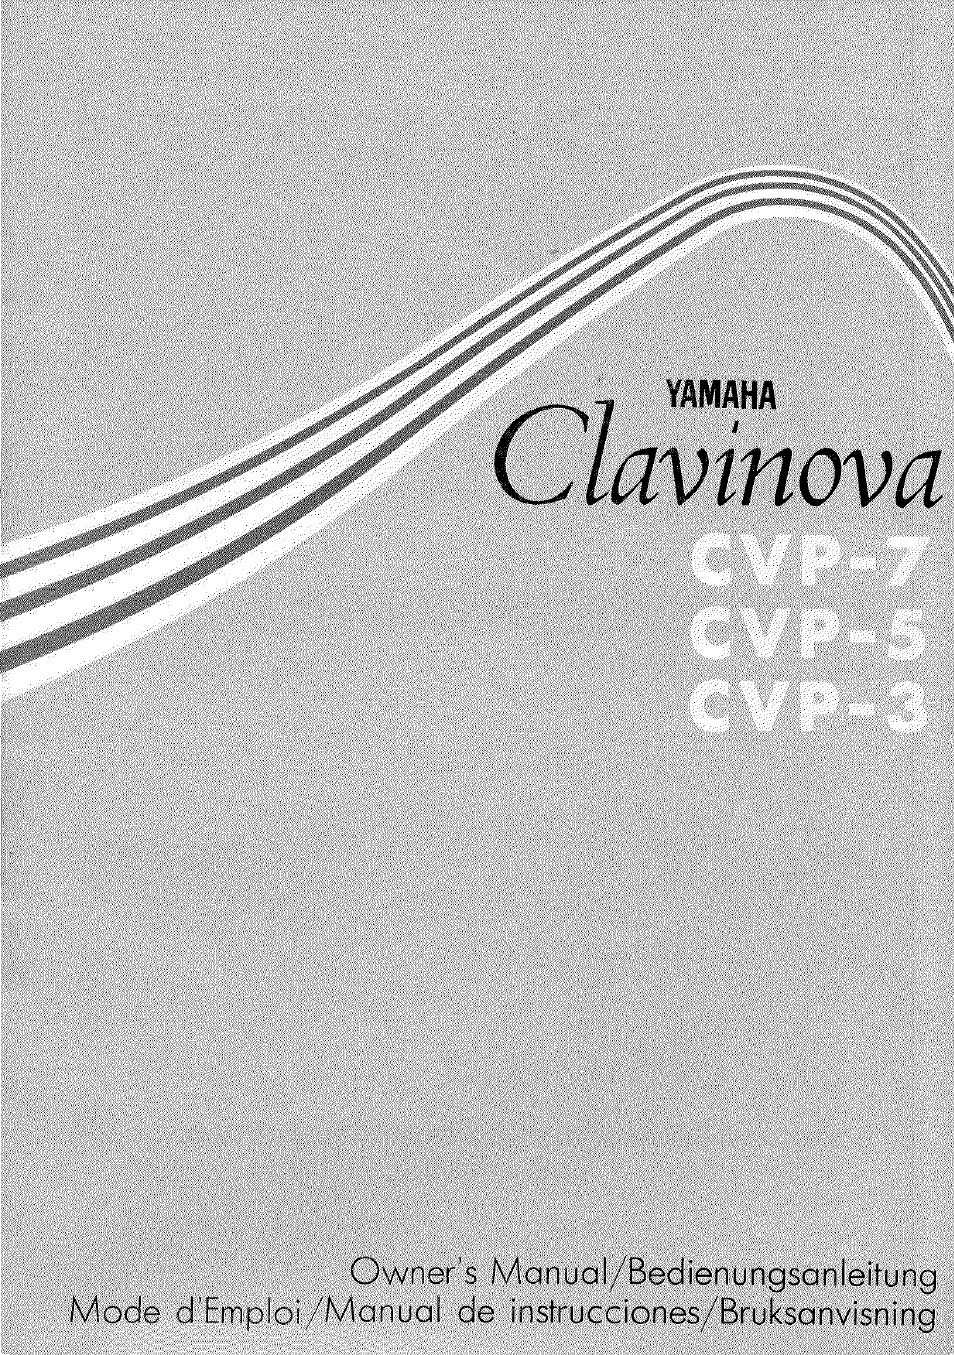 Clavinova CVP-5